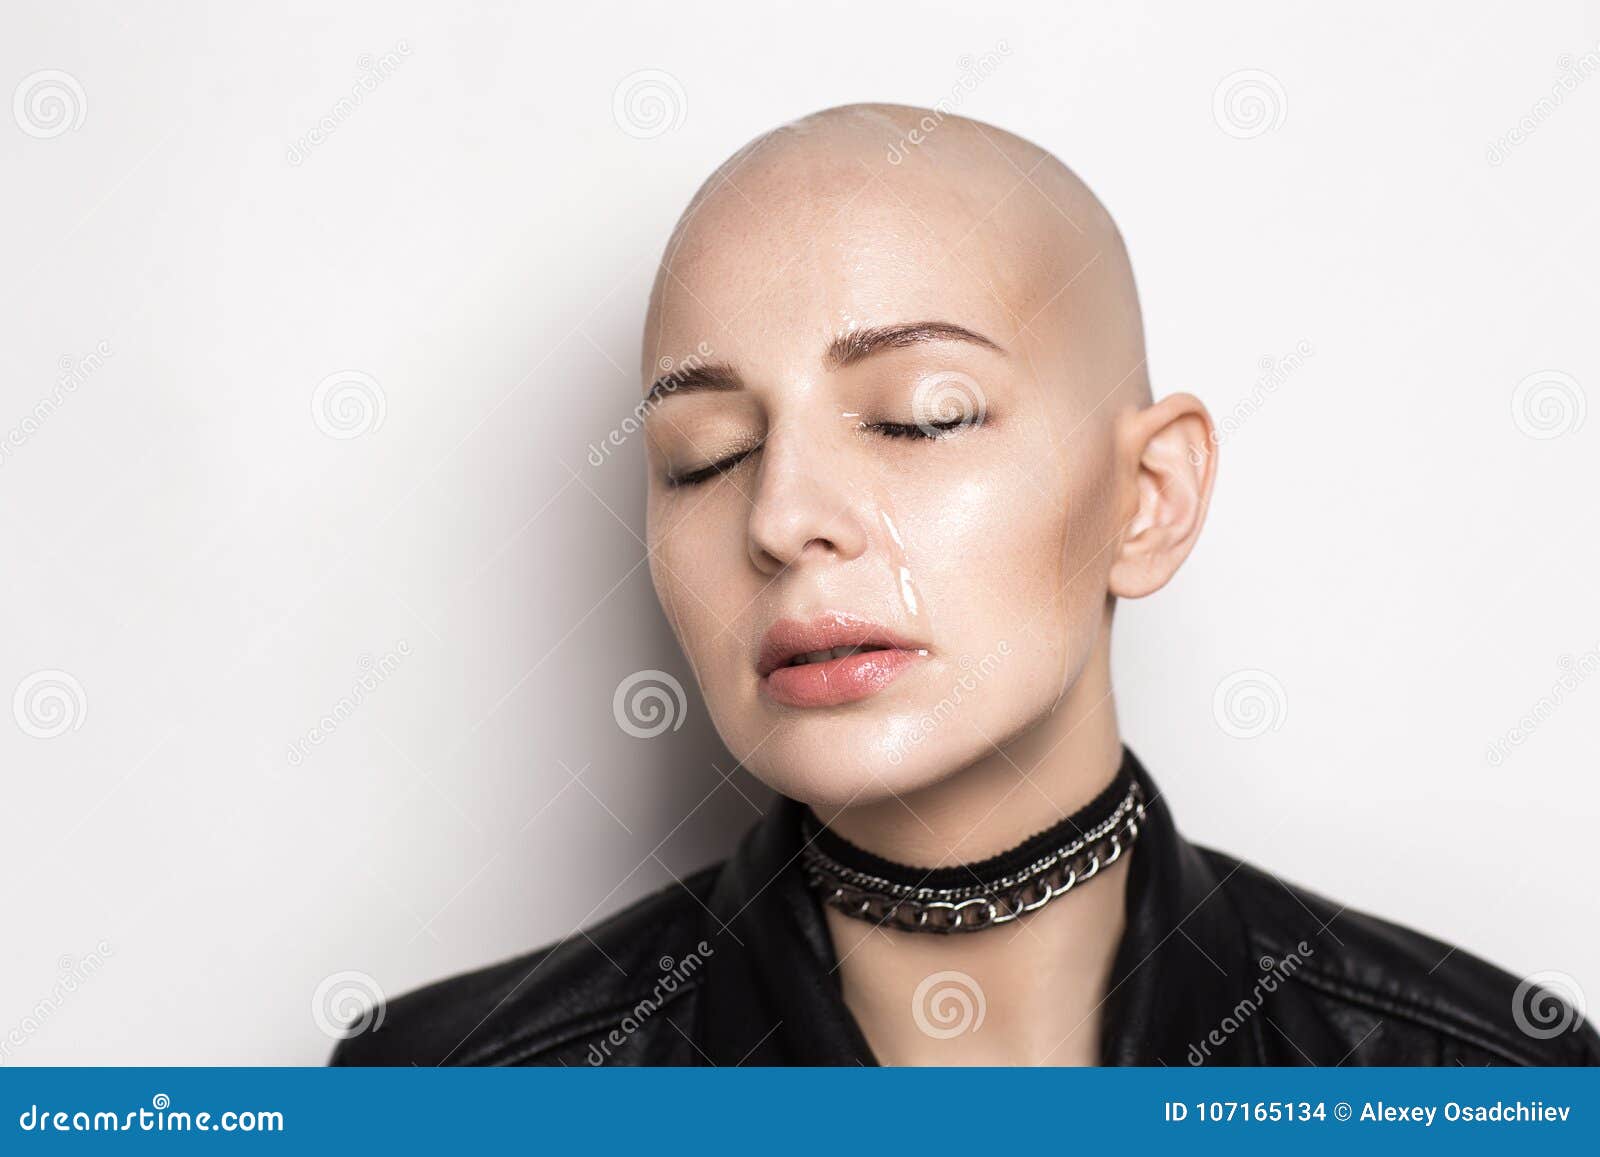 Wet bald woman stock photo. Image of baldness, hairless - 107165134